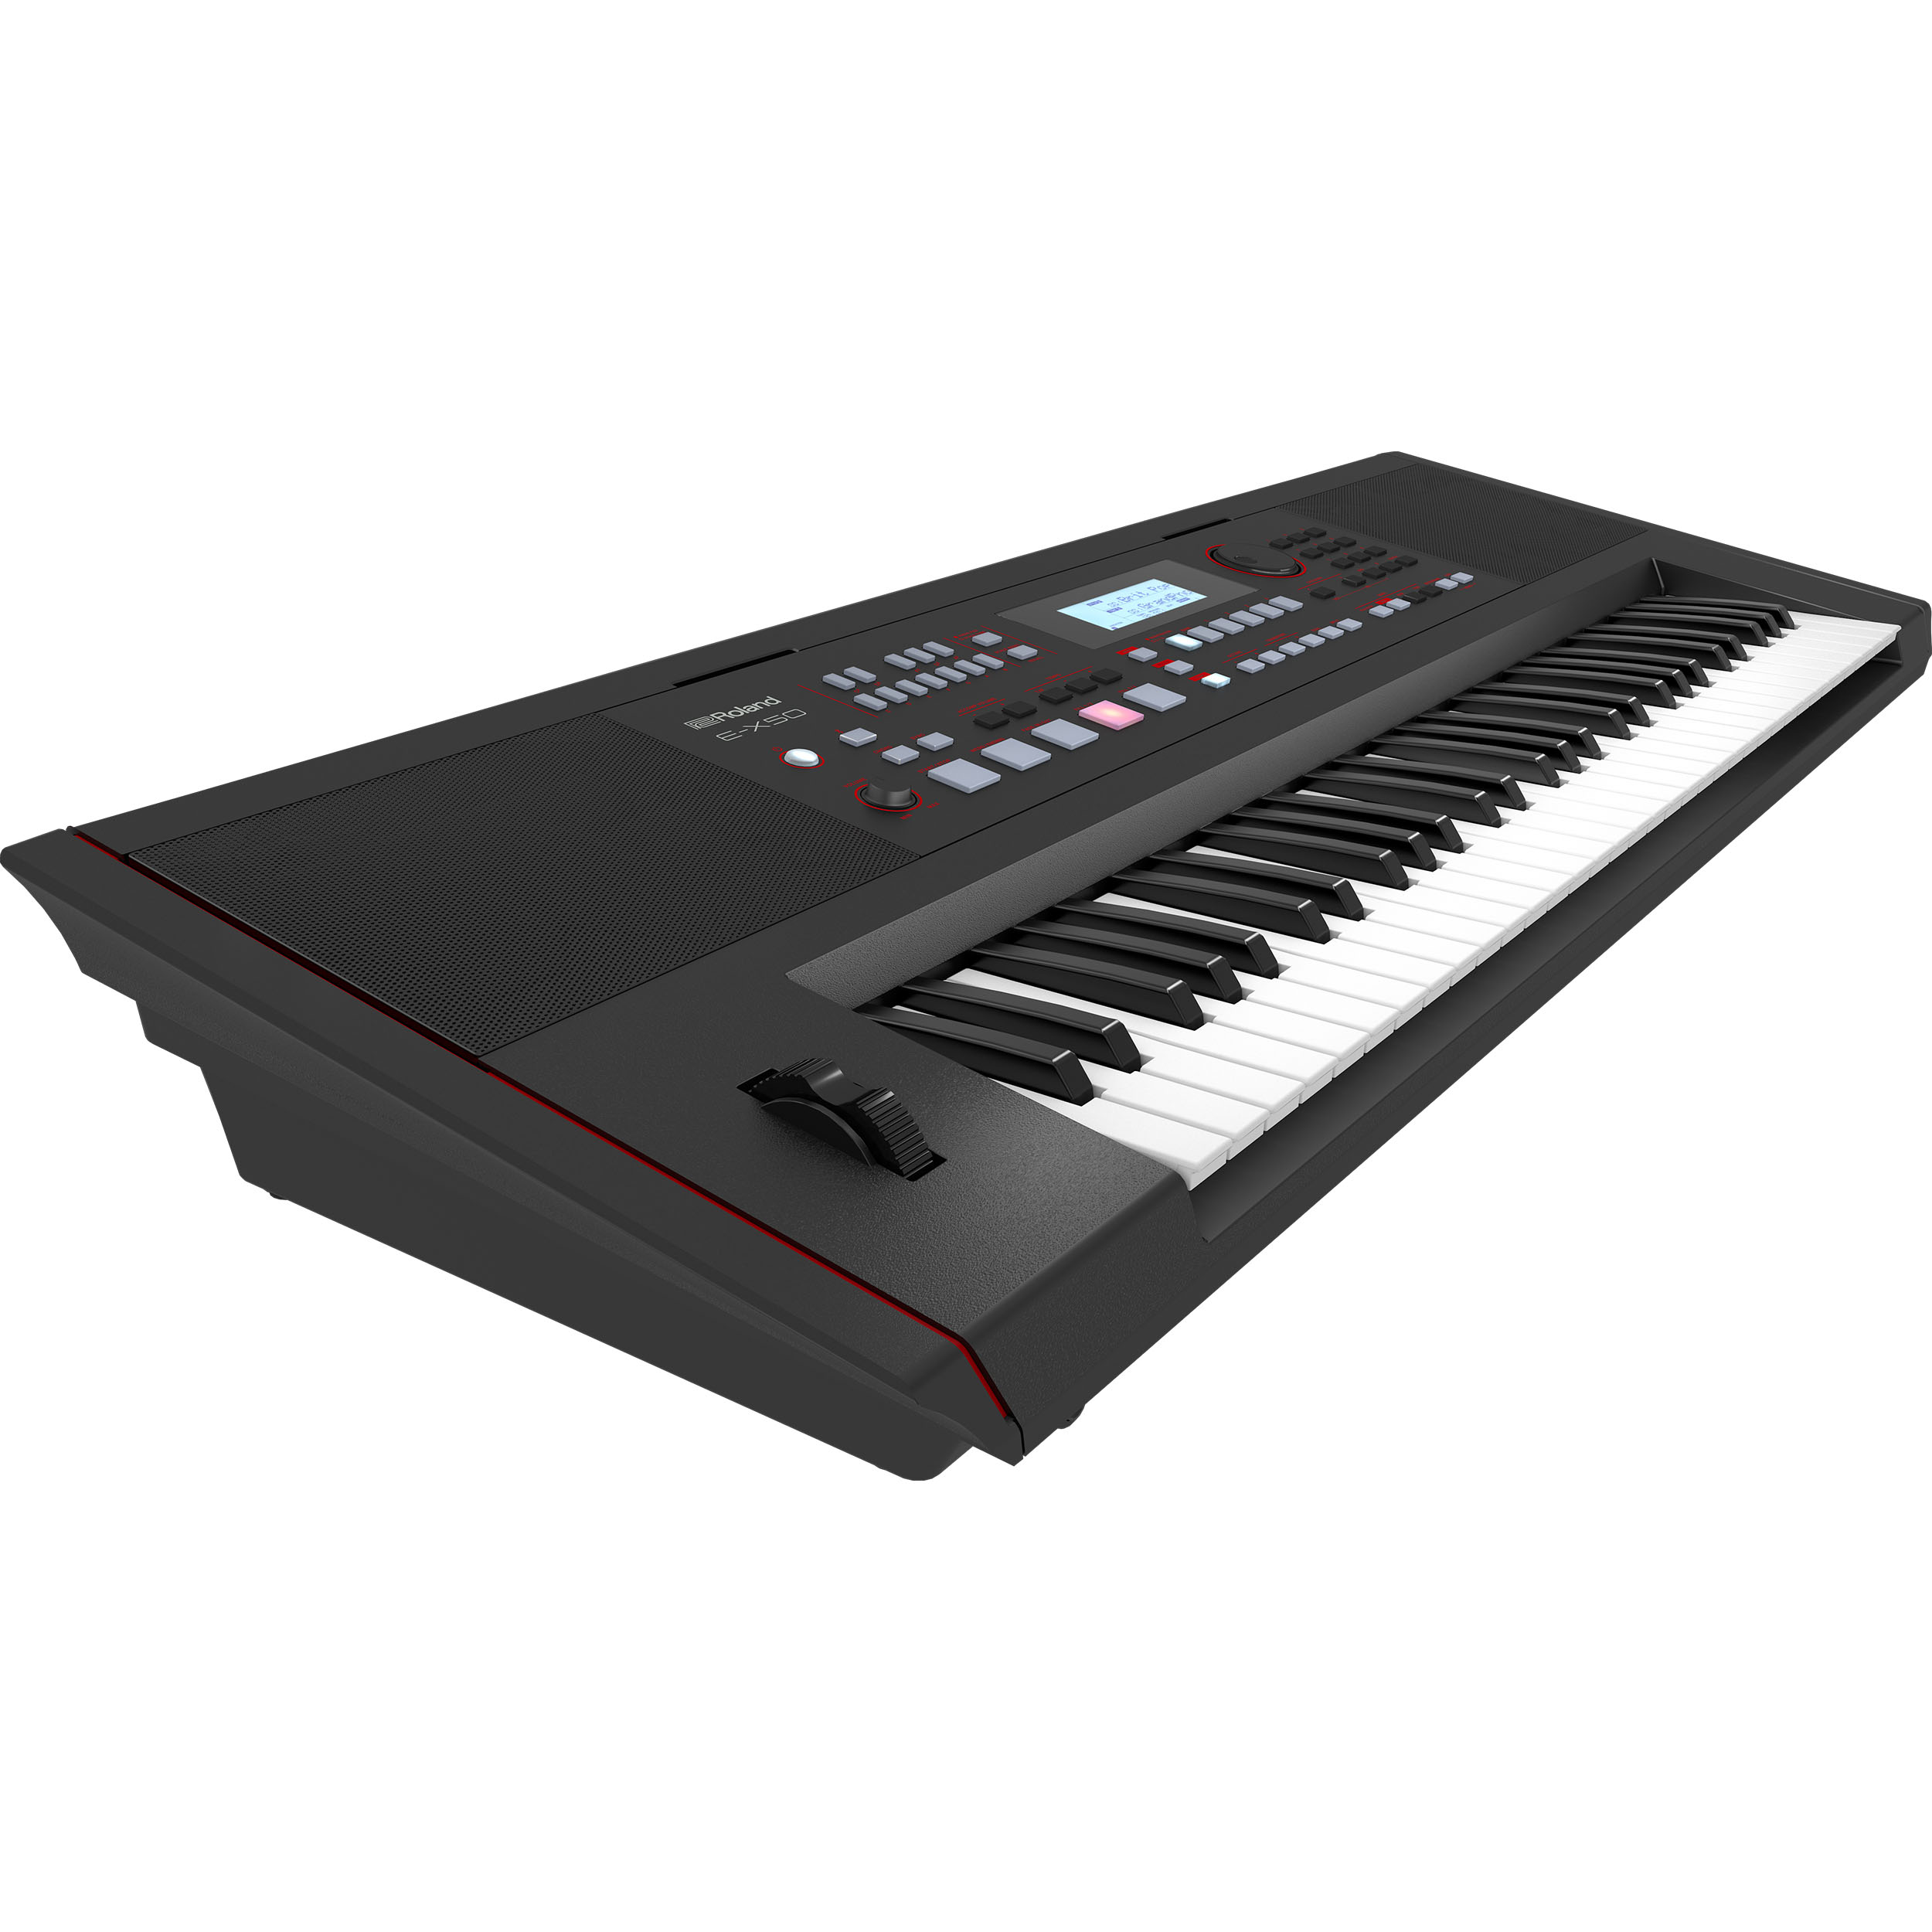 E-X50 Entertainer Keyboard